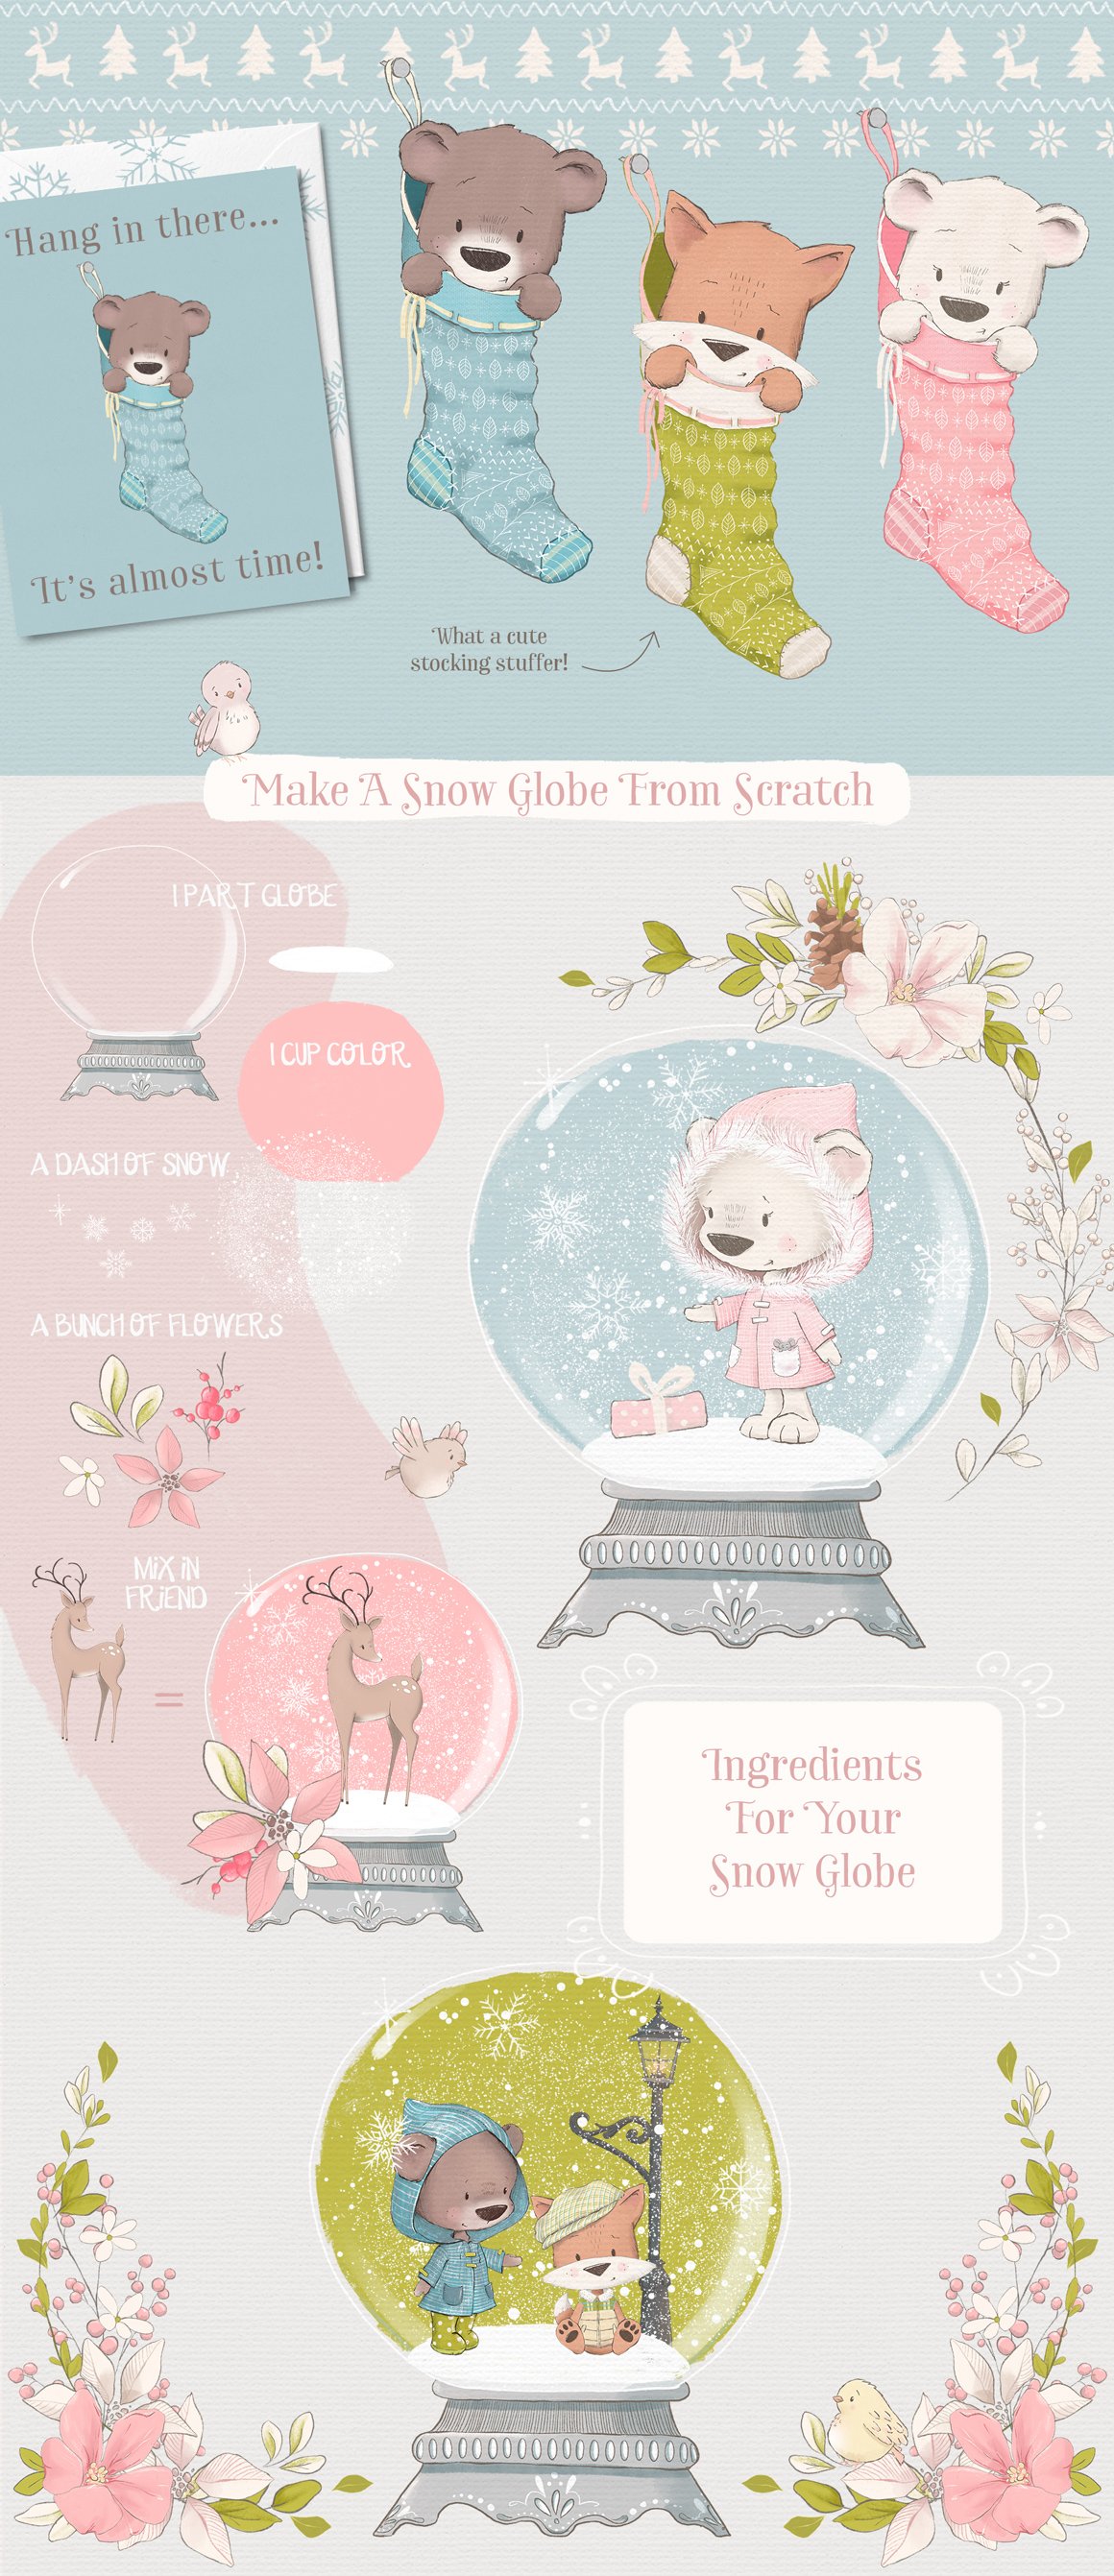 Snow Adorable Winter Illustration Clipart Kit